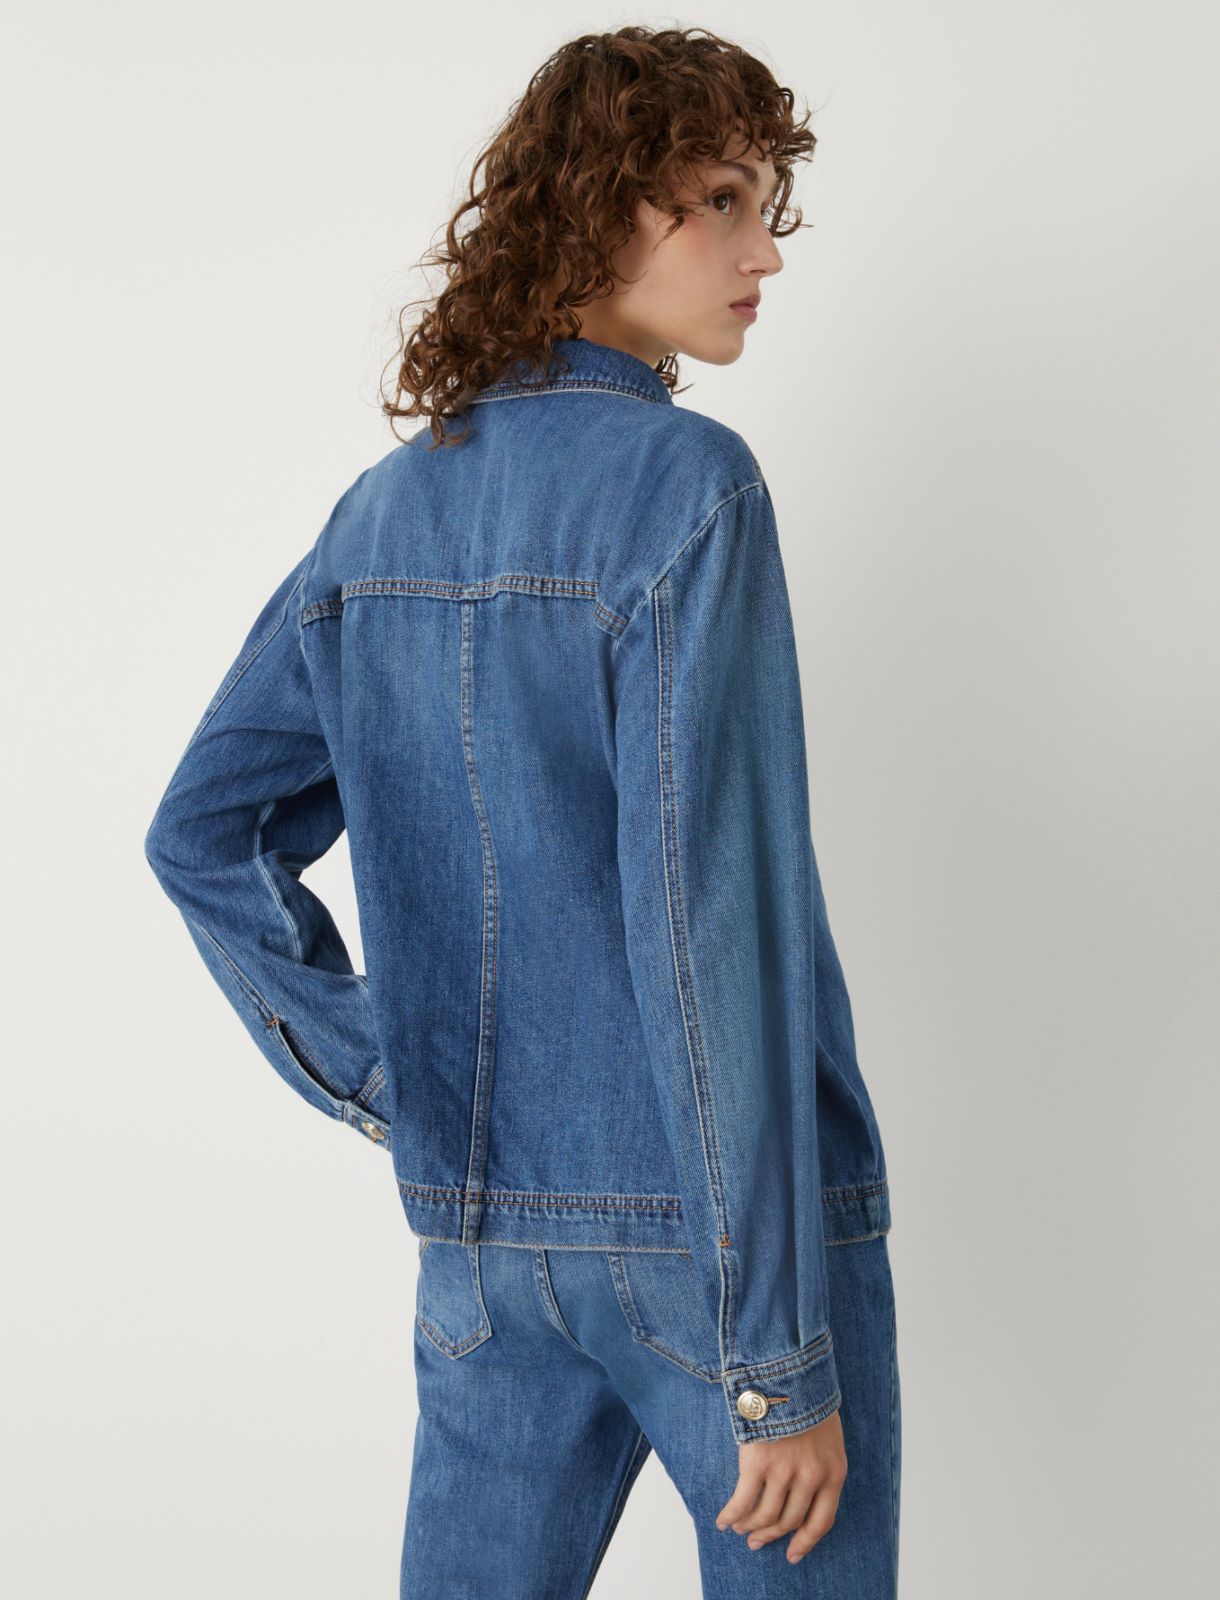 Veste-chemise en denim - Bleu jeans - Marella - 2